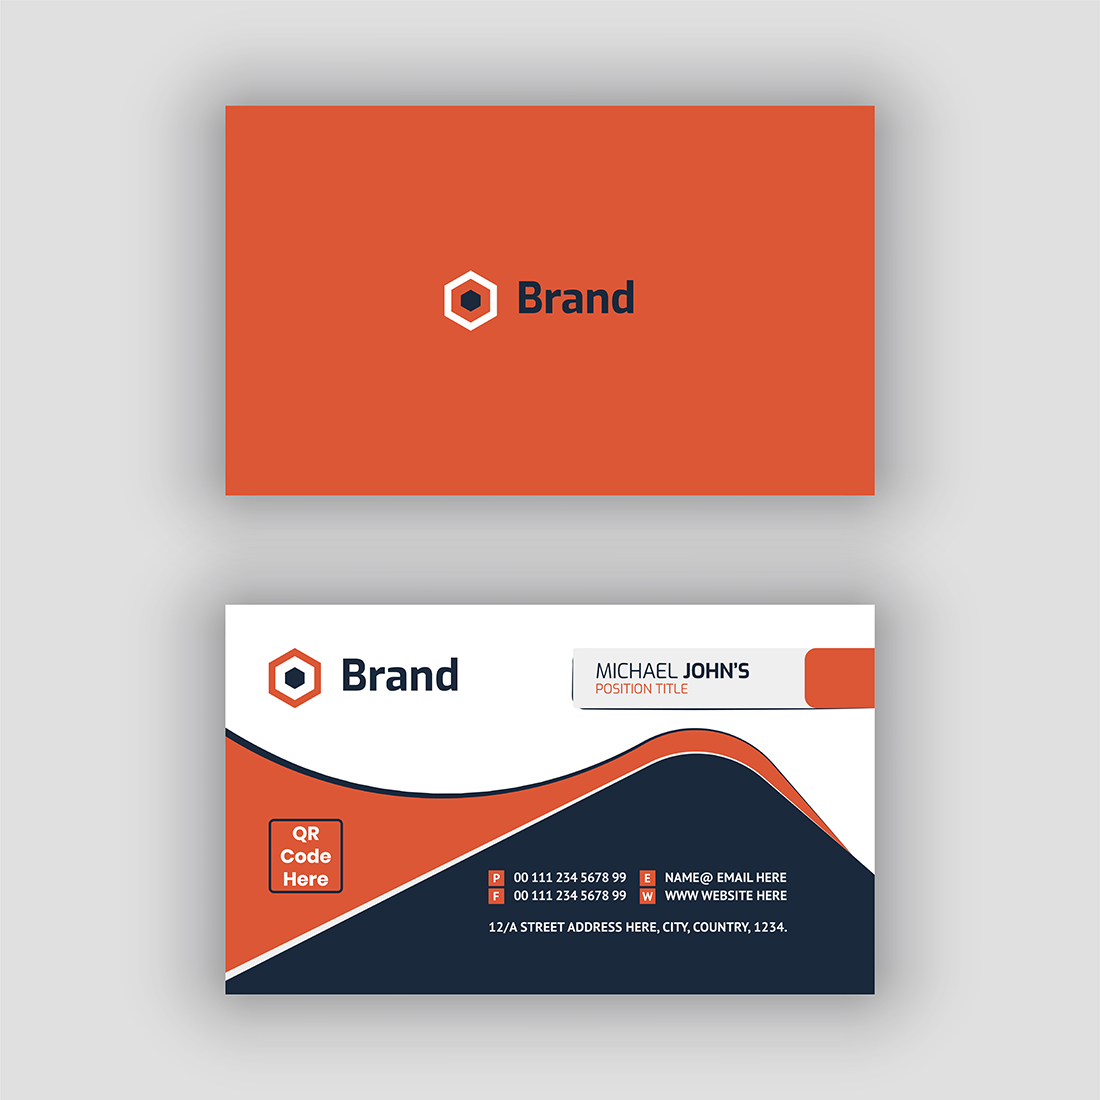 Elegant Minimal Black And Orange Business Card Template cover image.